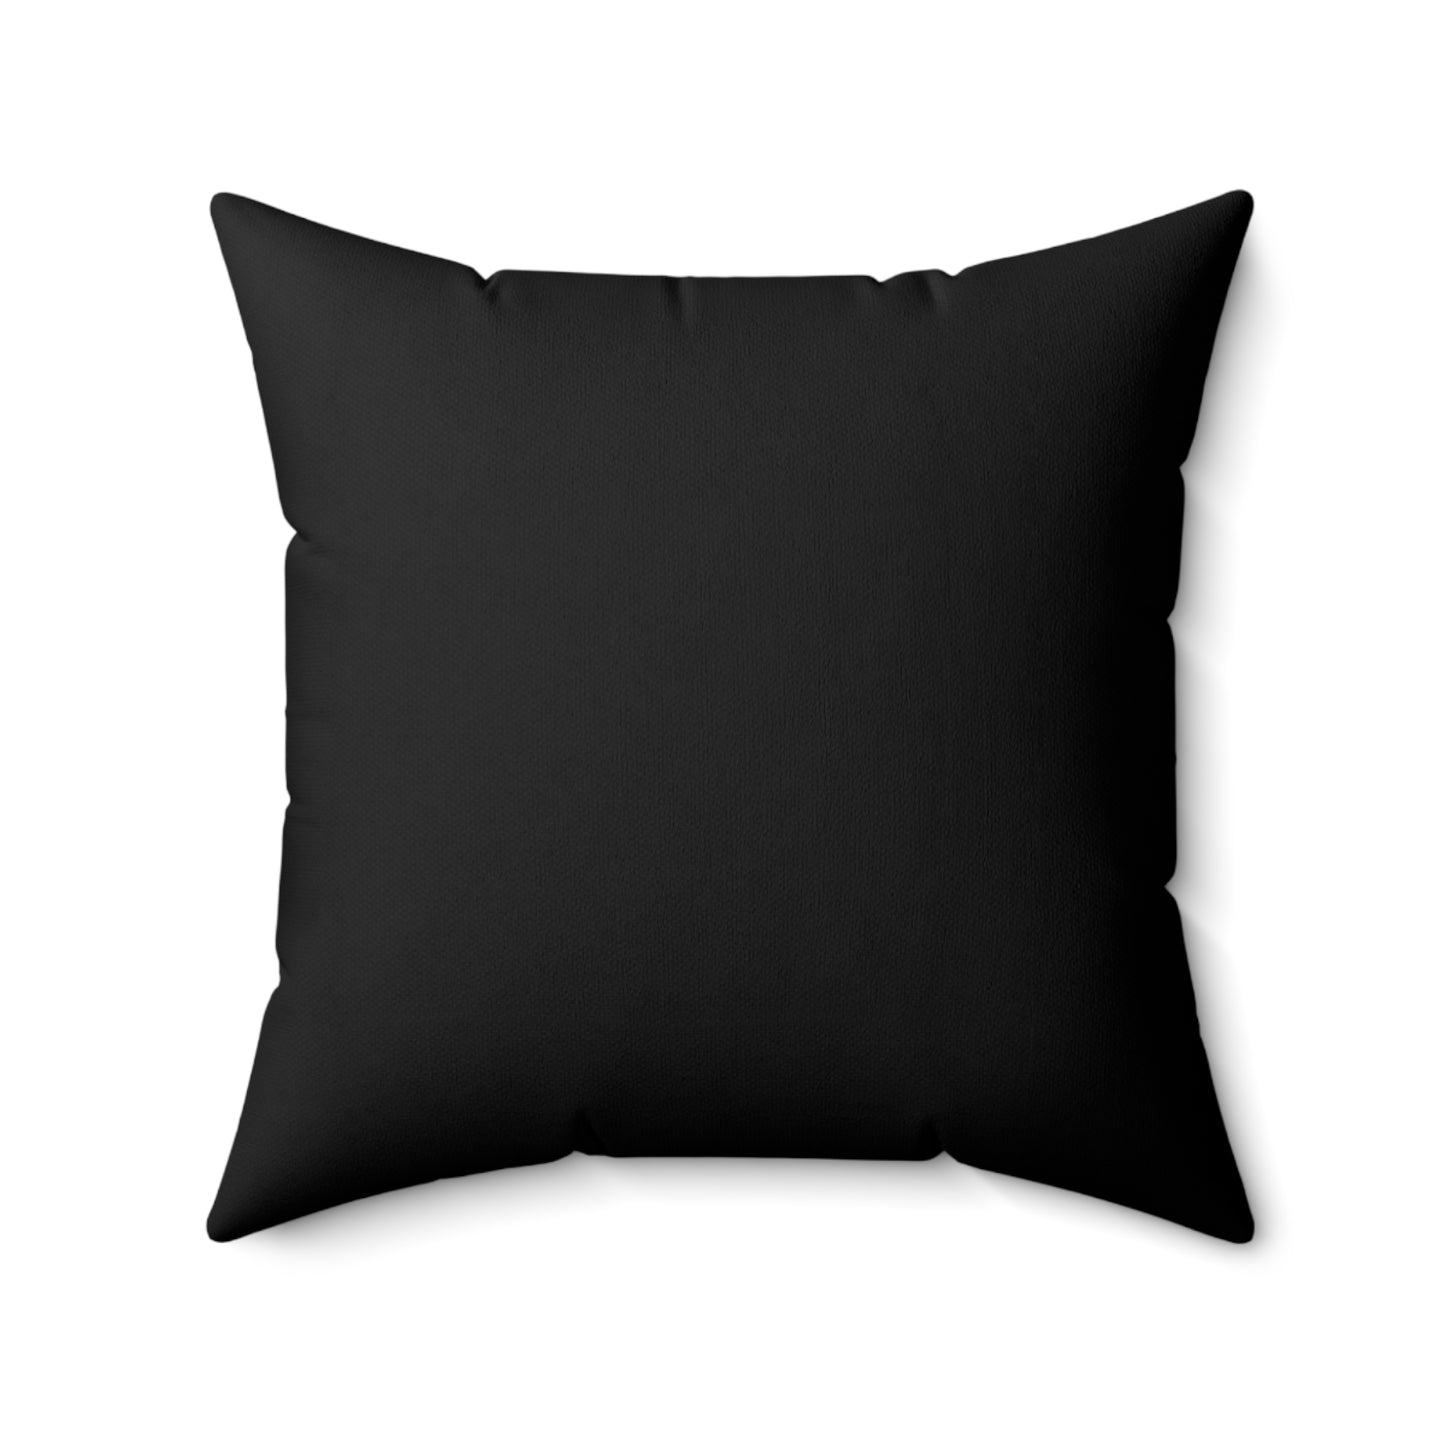 Indoor decorative cushion- Lincoln Steephill